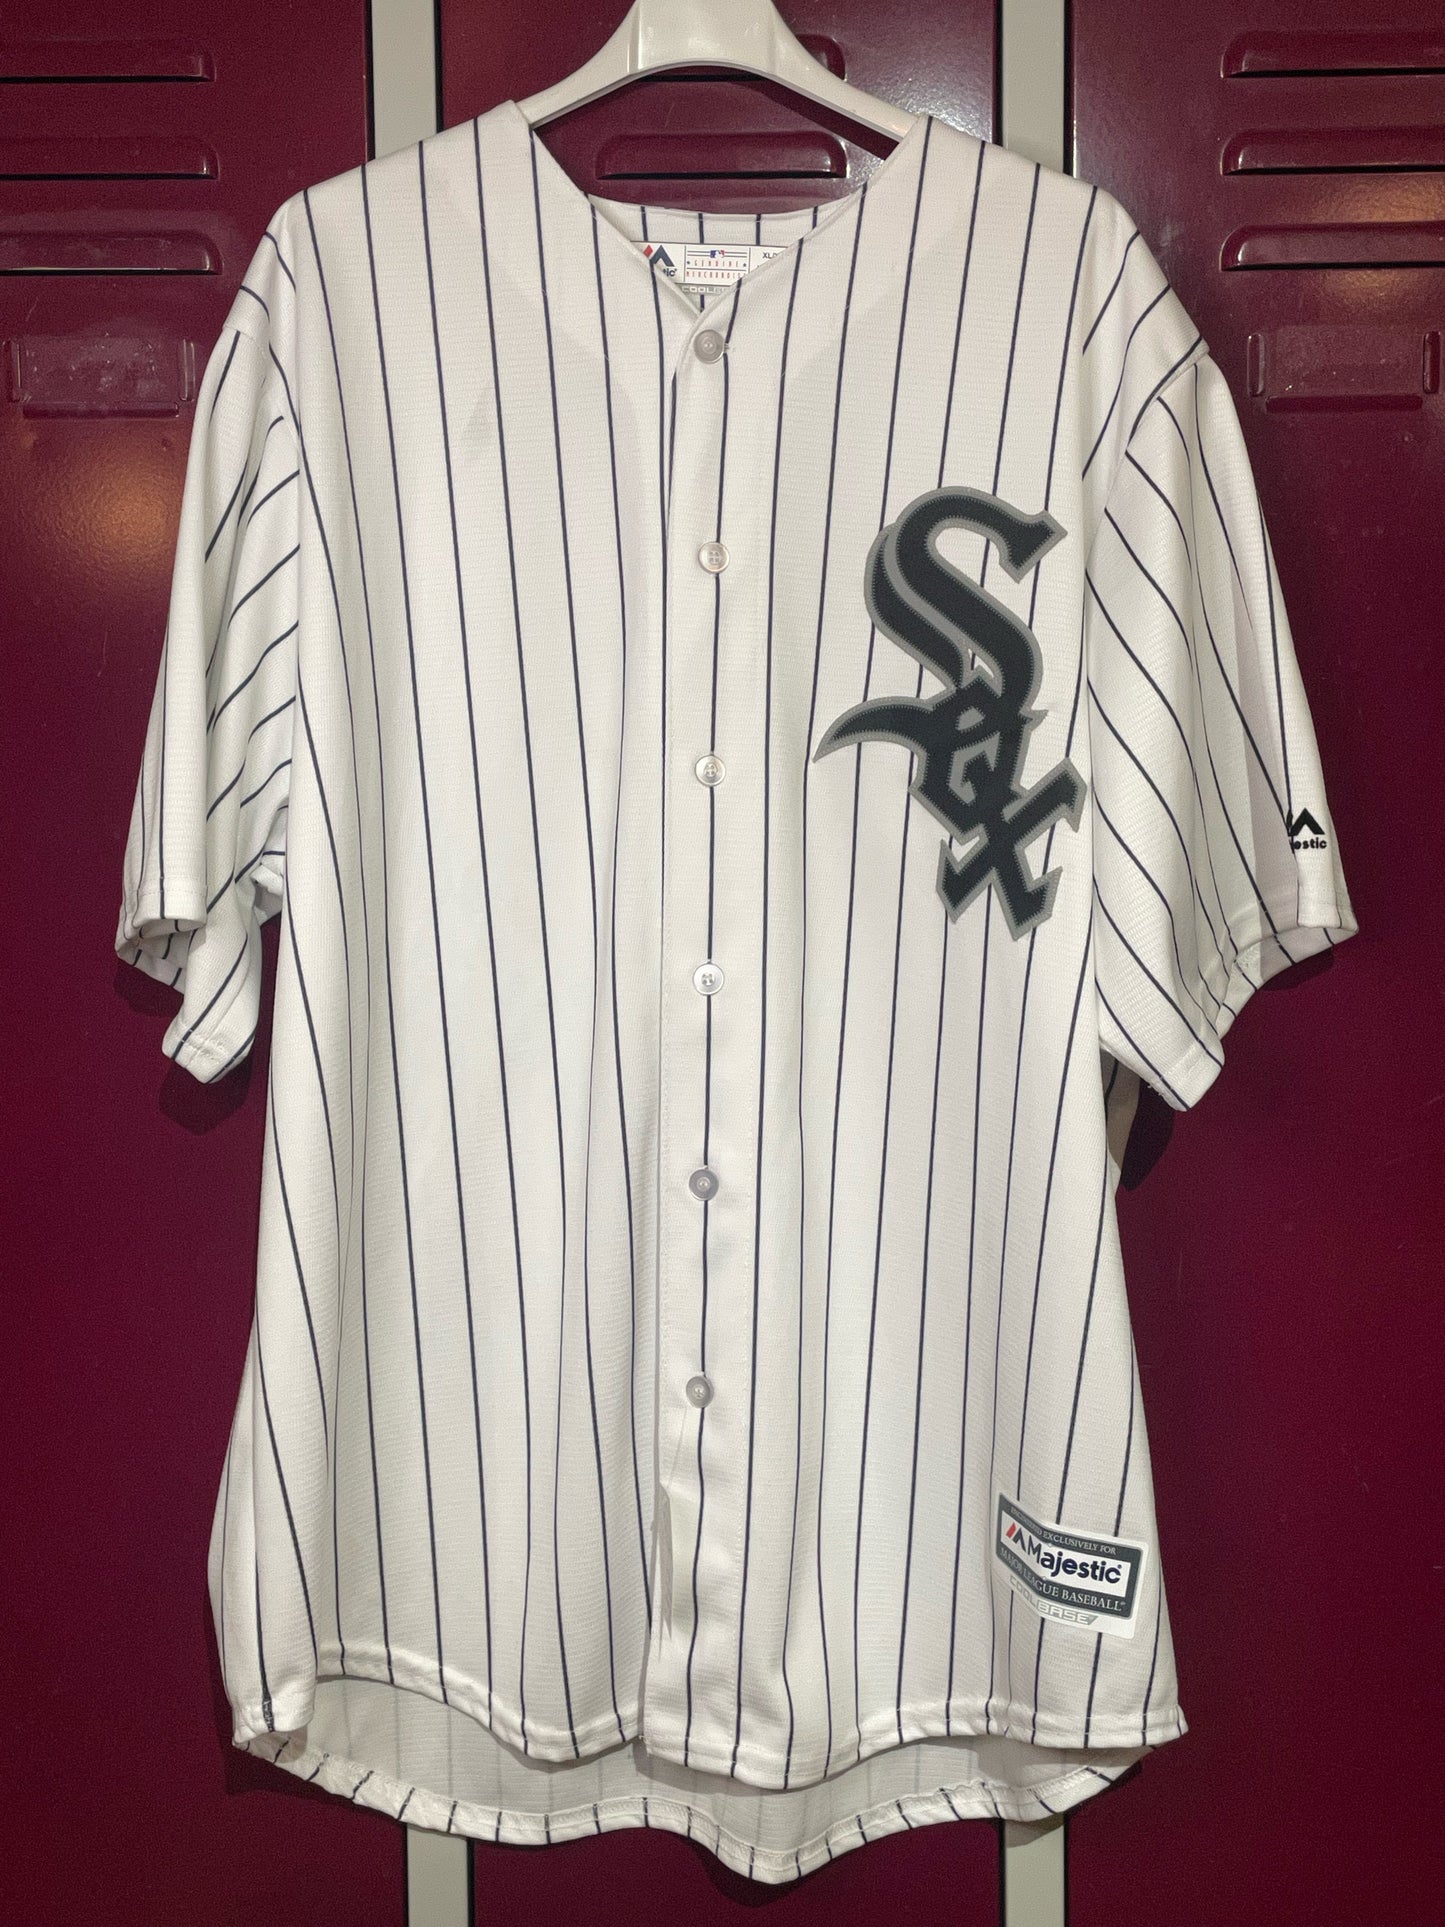 Xl Sox Shirt 